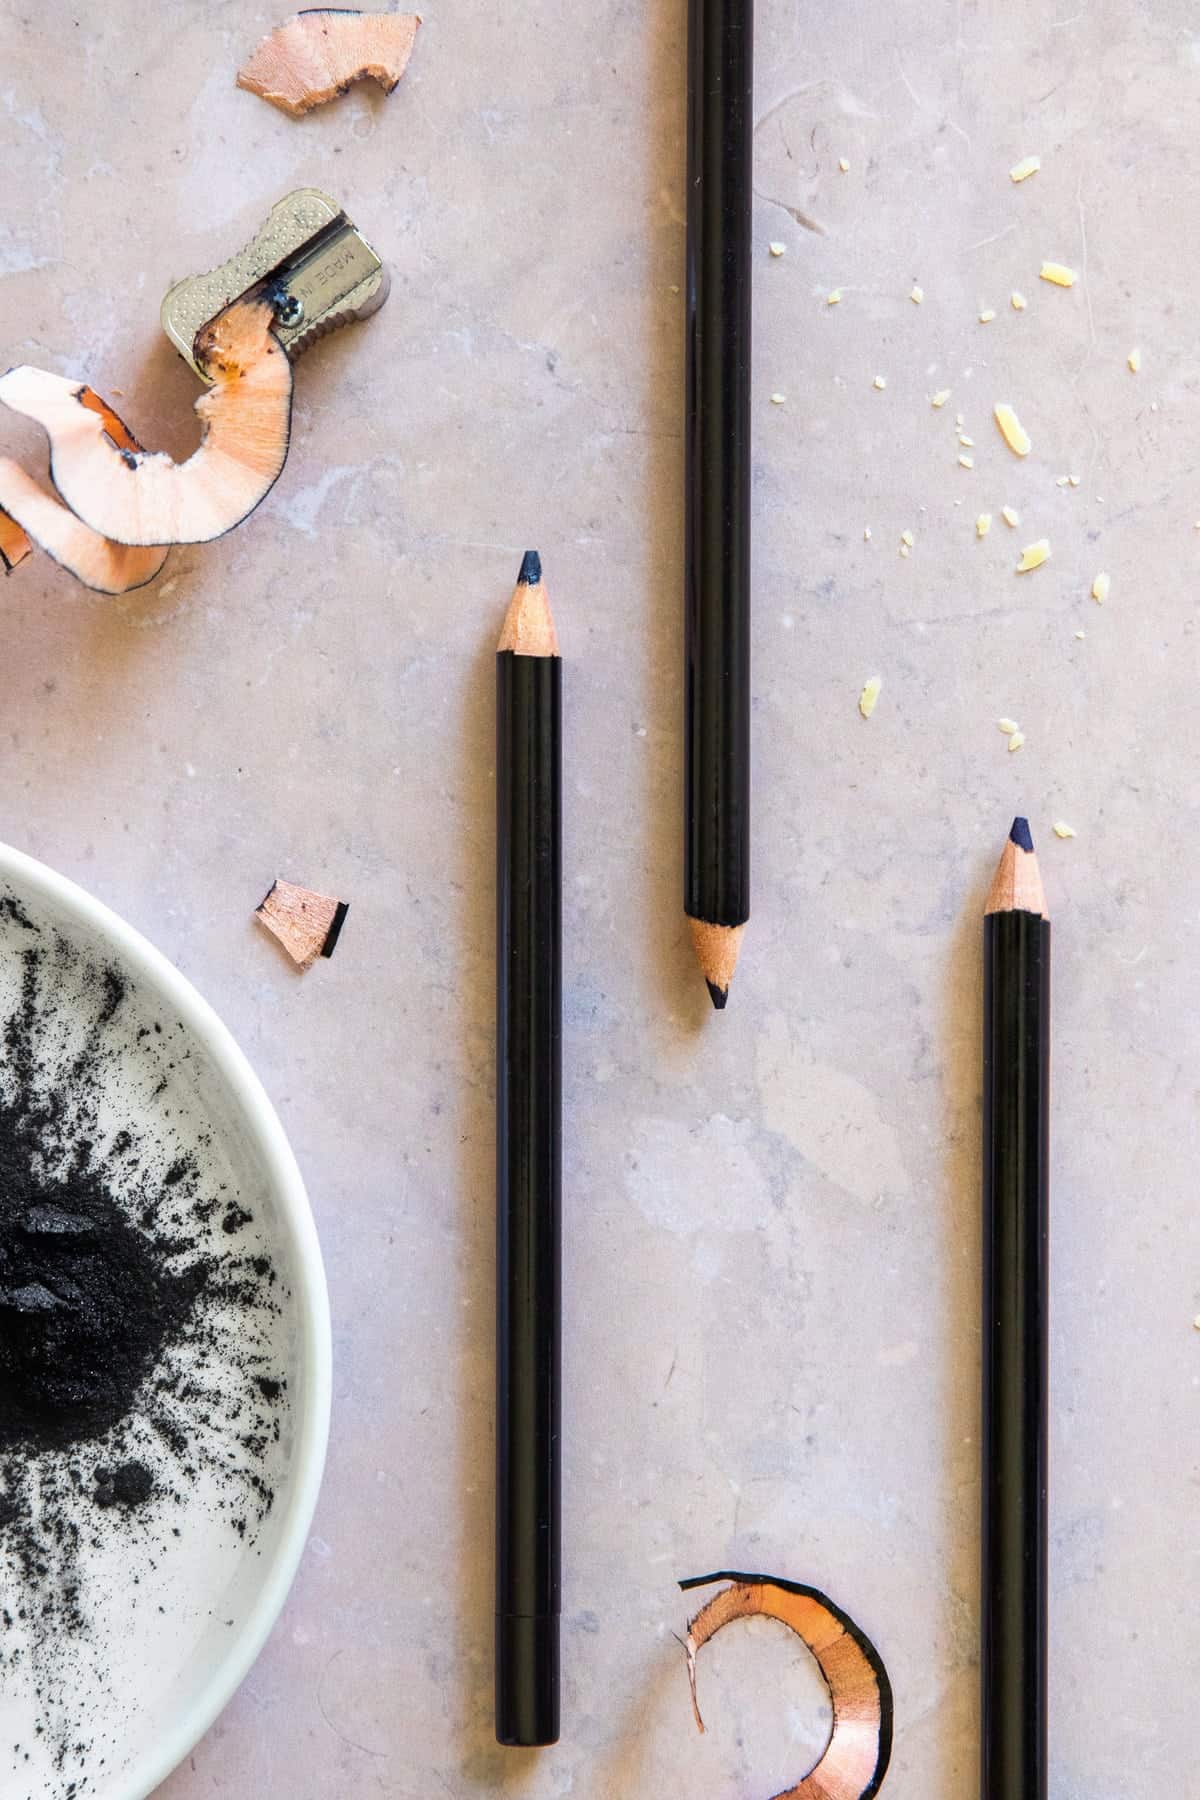 How to make eyeliner pencils